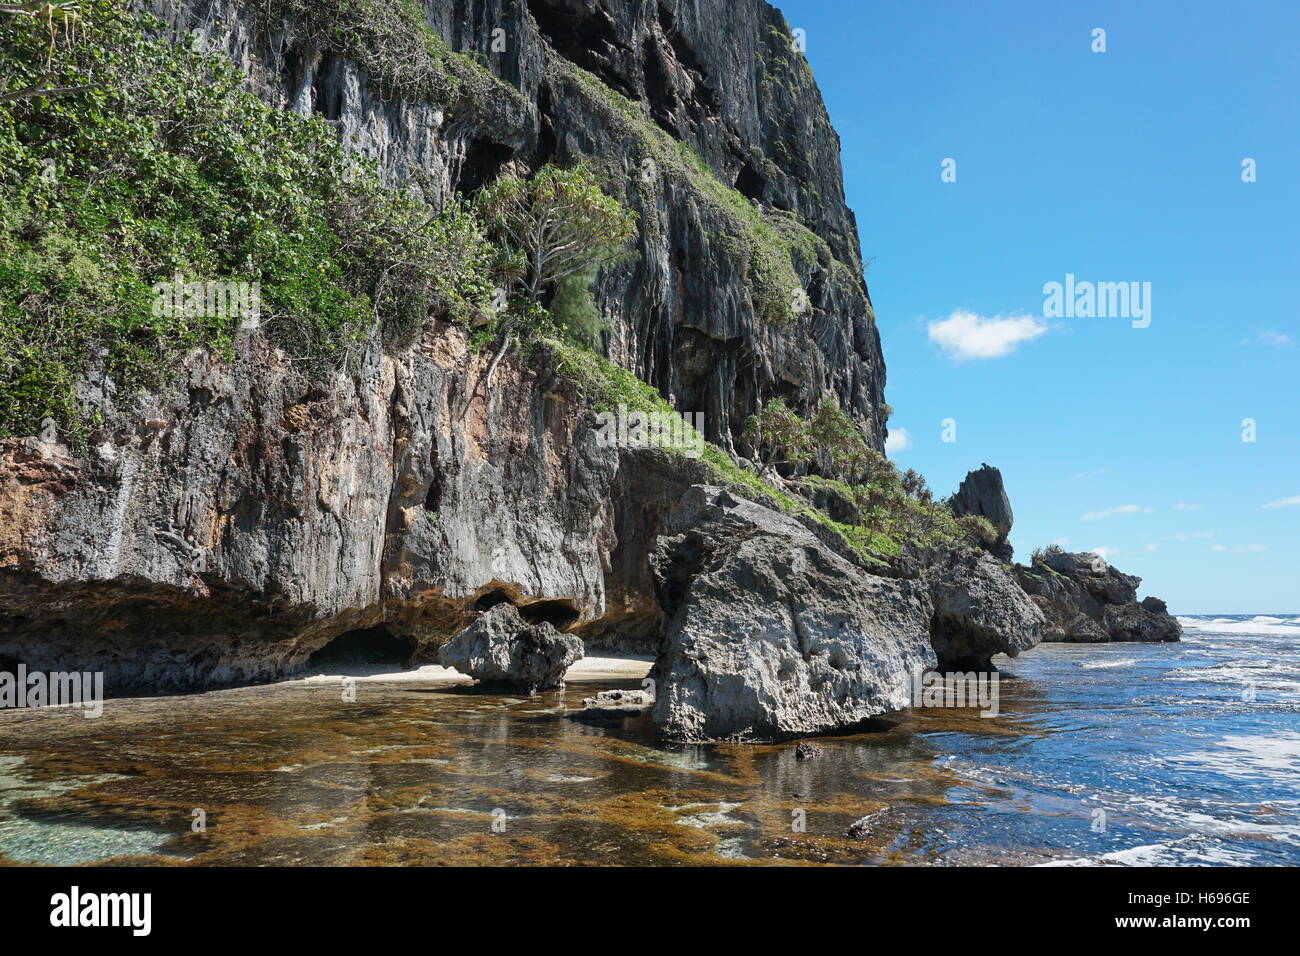 Coastal cliff on the sea shore of Rurutu island, Pacific ocean, Austral archipelago, French Polynesia Stock Photo